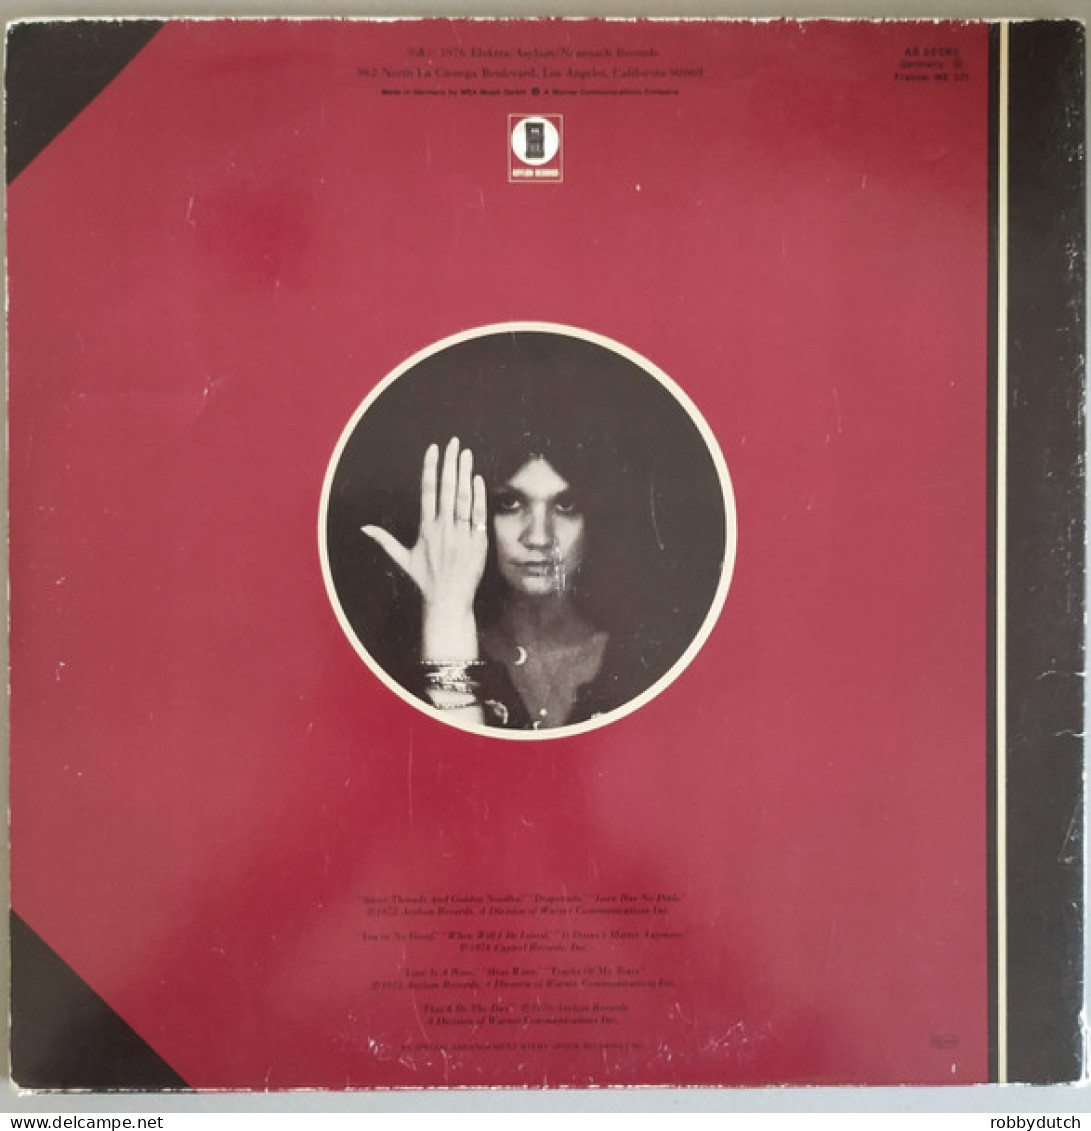 * LP *  LINDA RONSTADT - GREATEST HITS (Europe 1976 EX-) - Country Et Folk